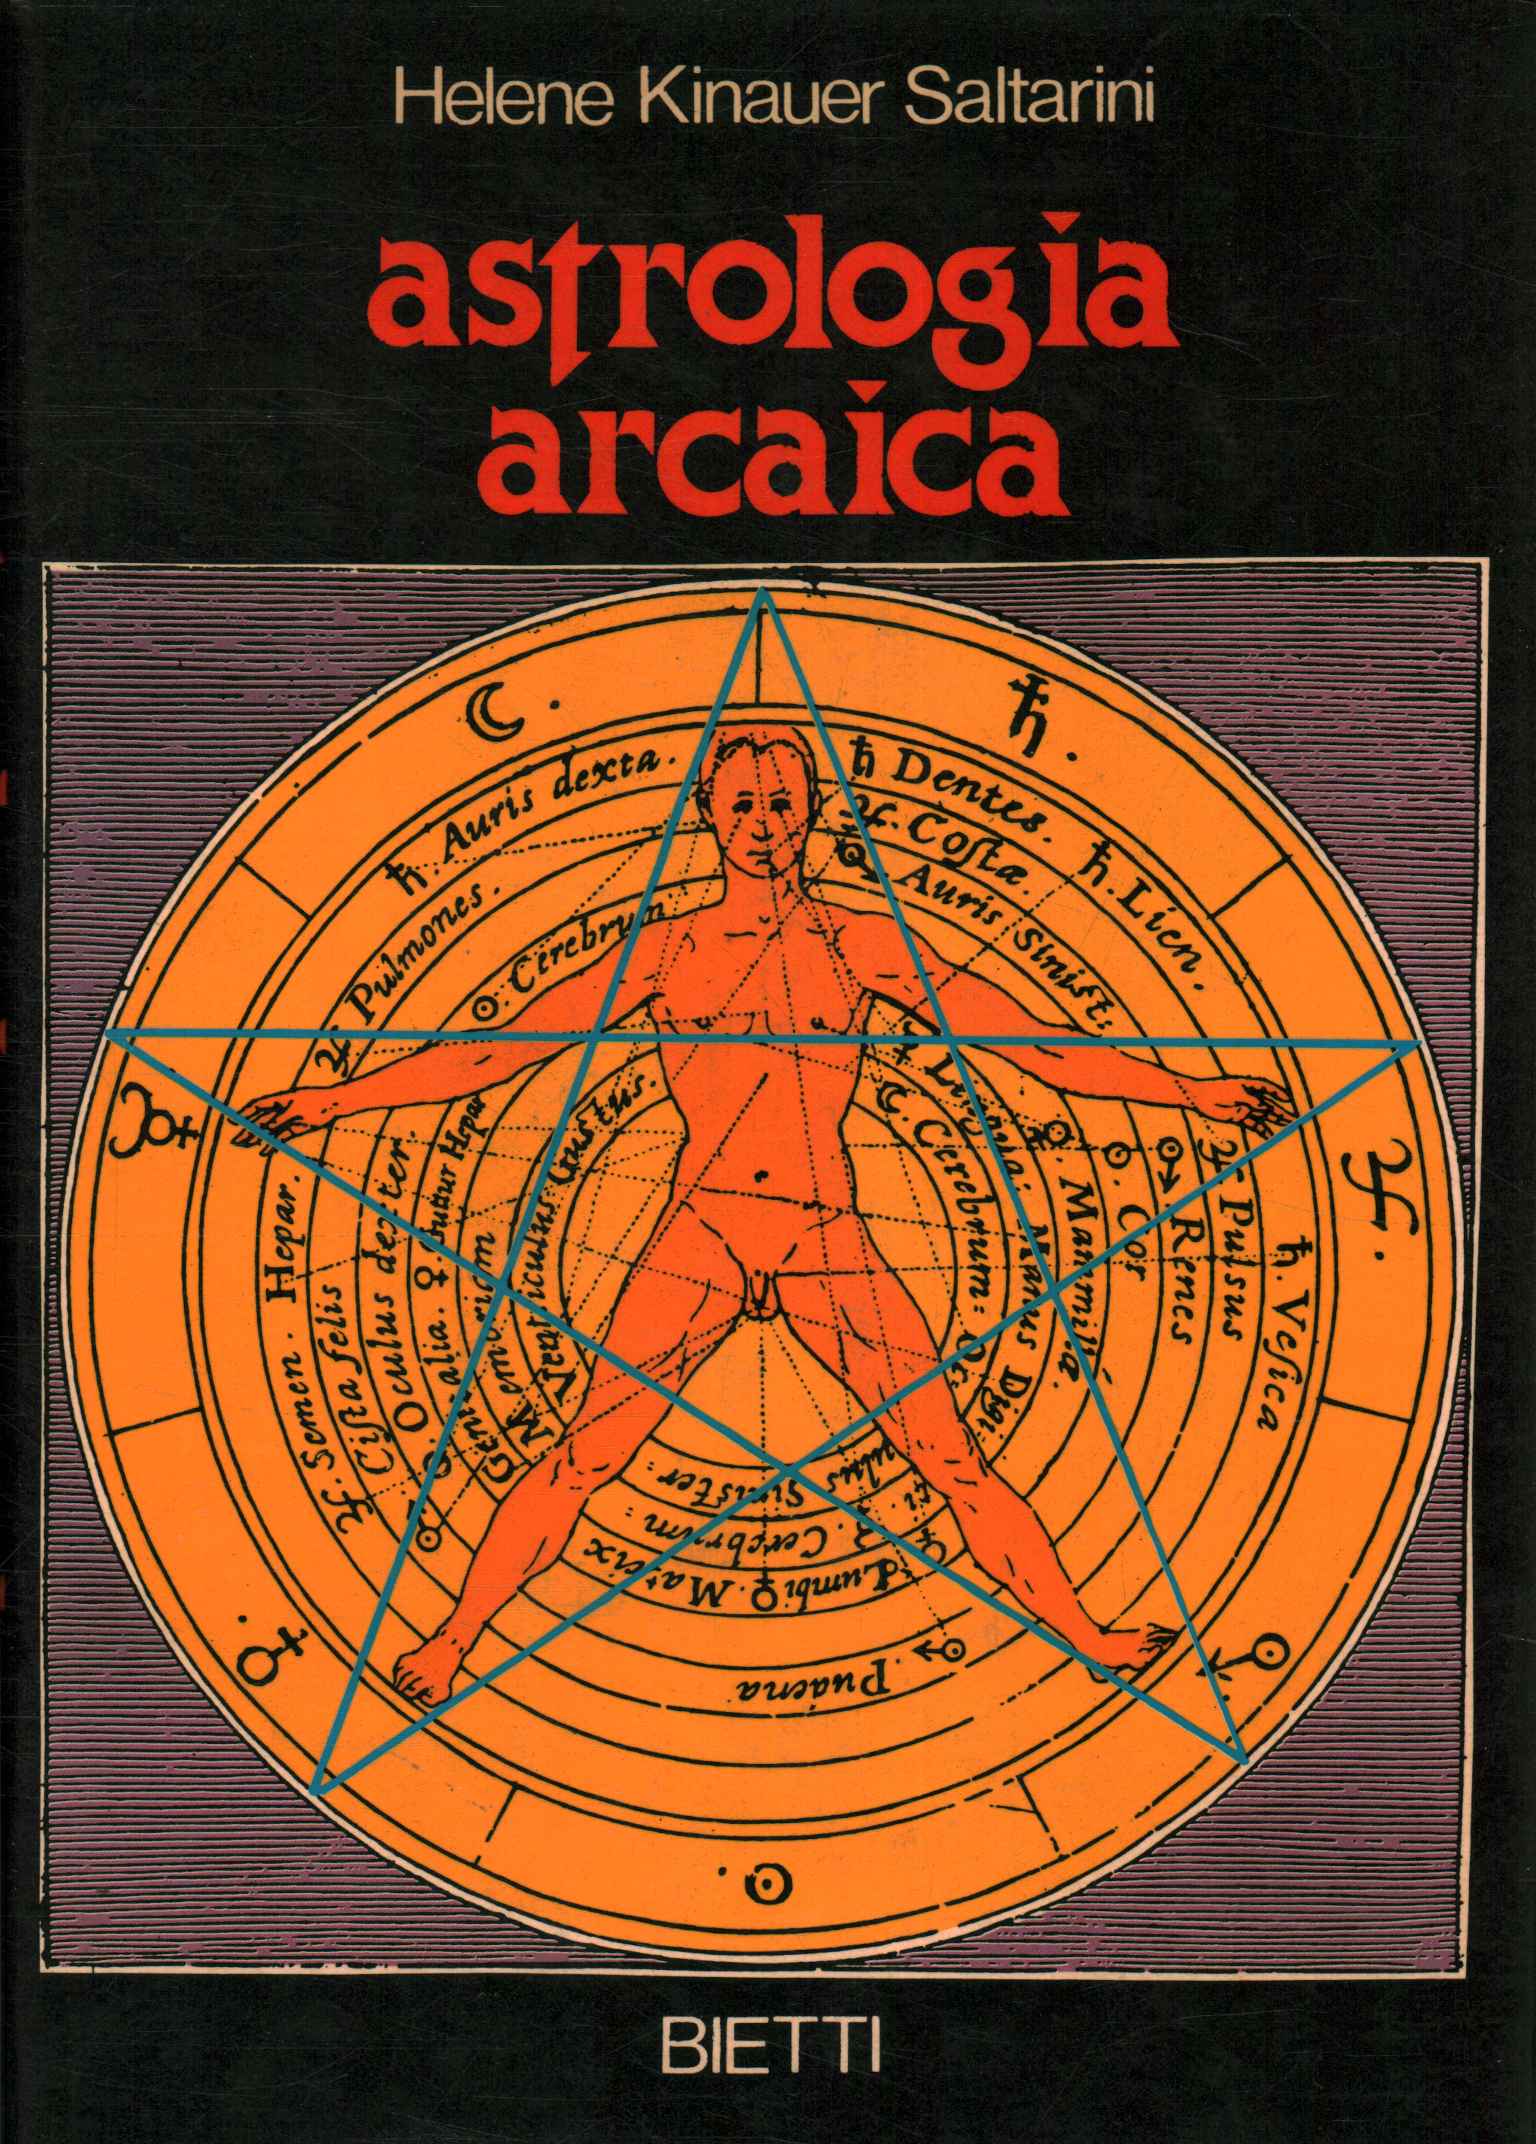 Archaic astrology